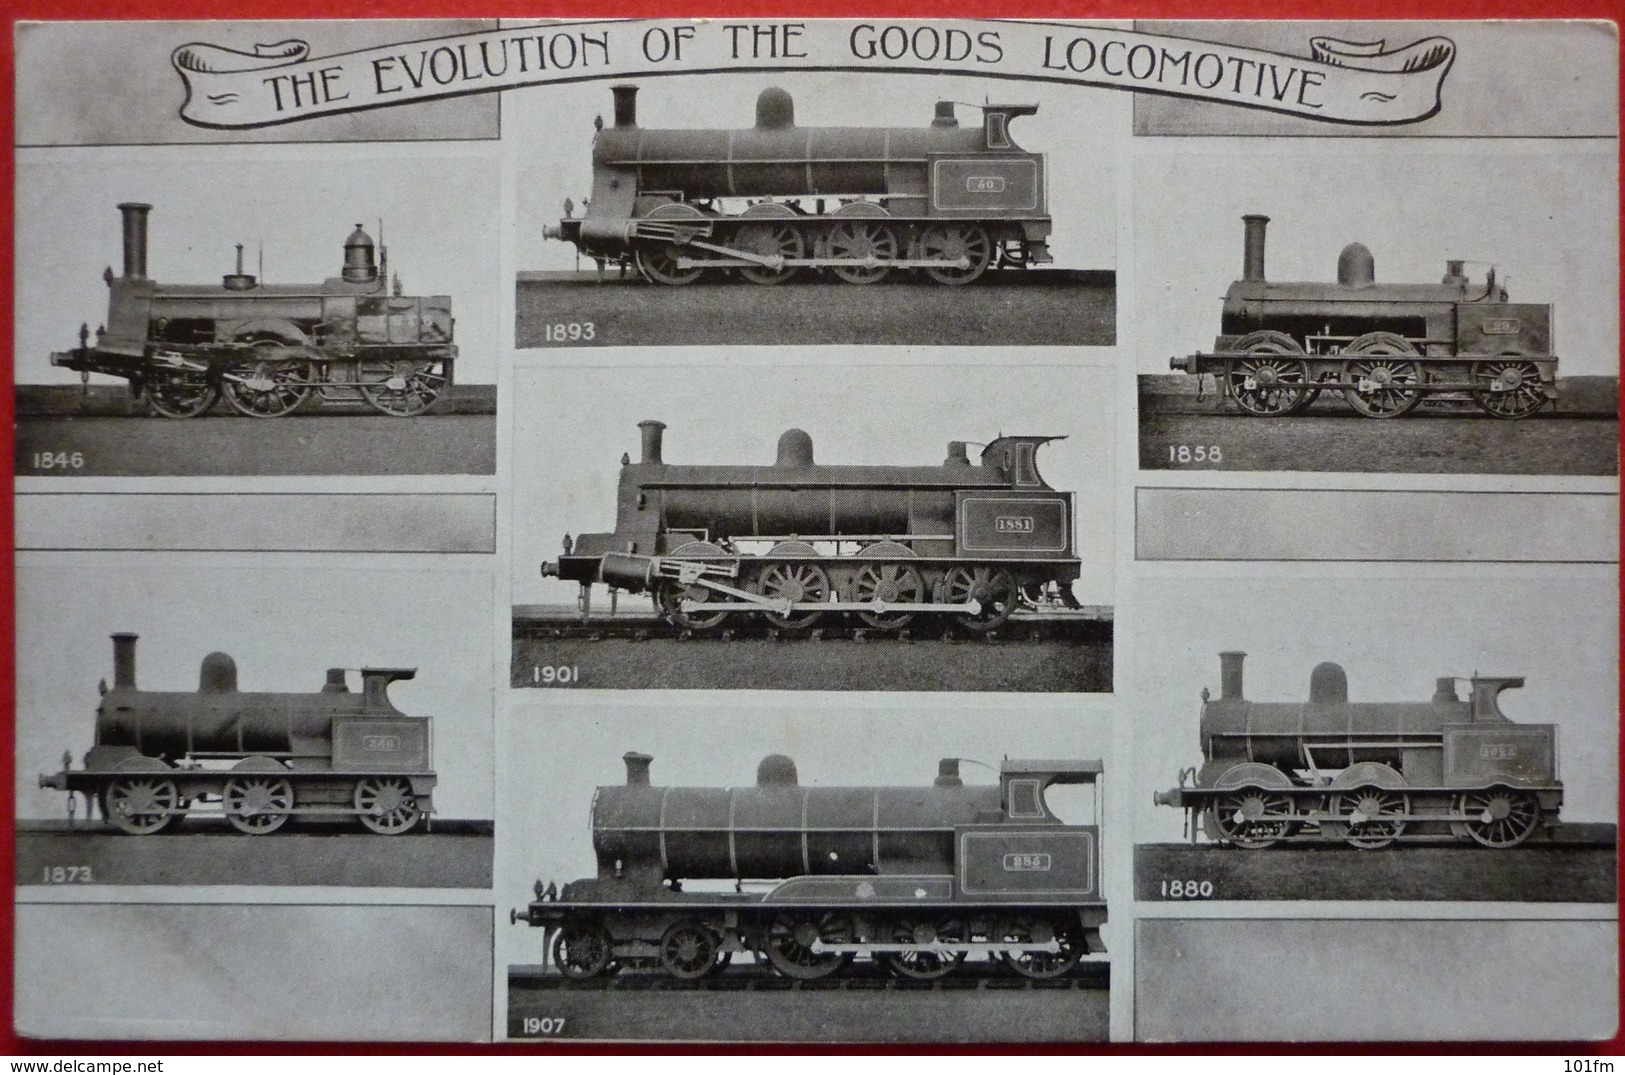 THE EVOLUTION OF THE GOODS LOCOMOTIVE - STEAM LOCOMOTIVE - Trenes